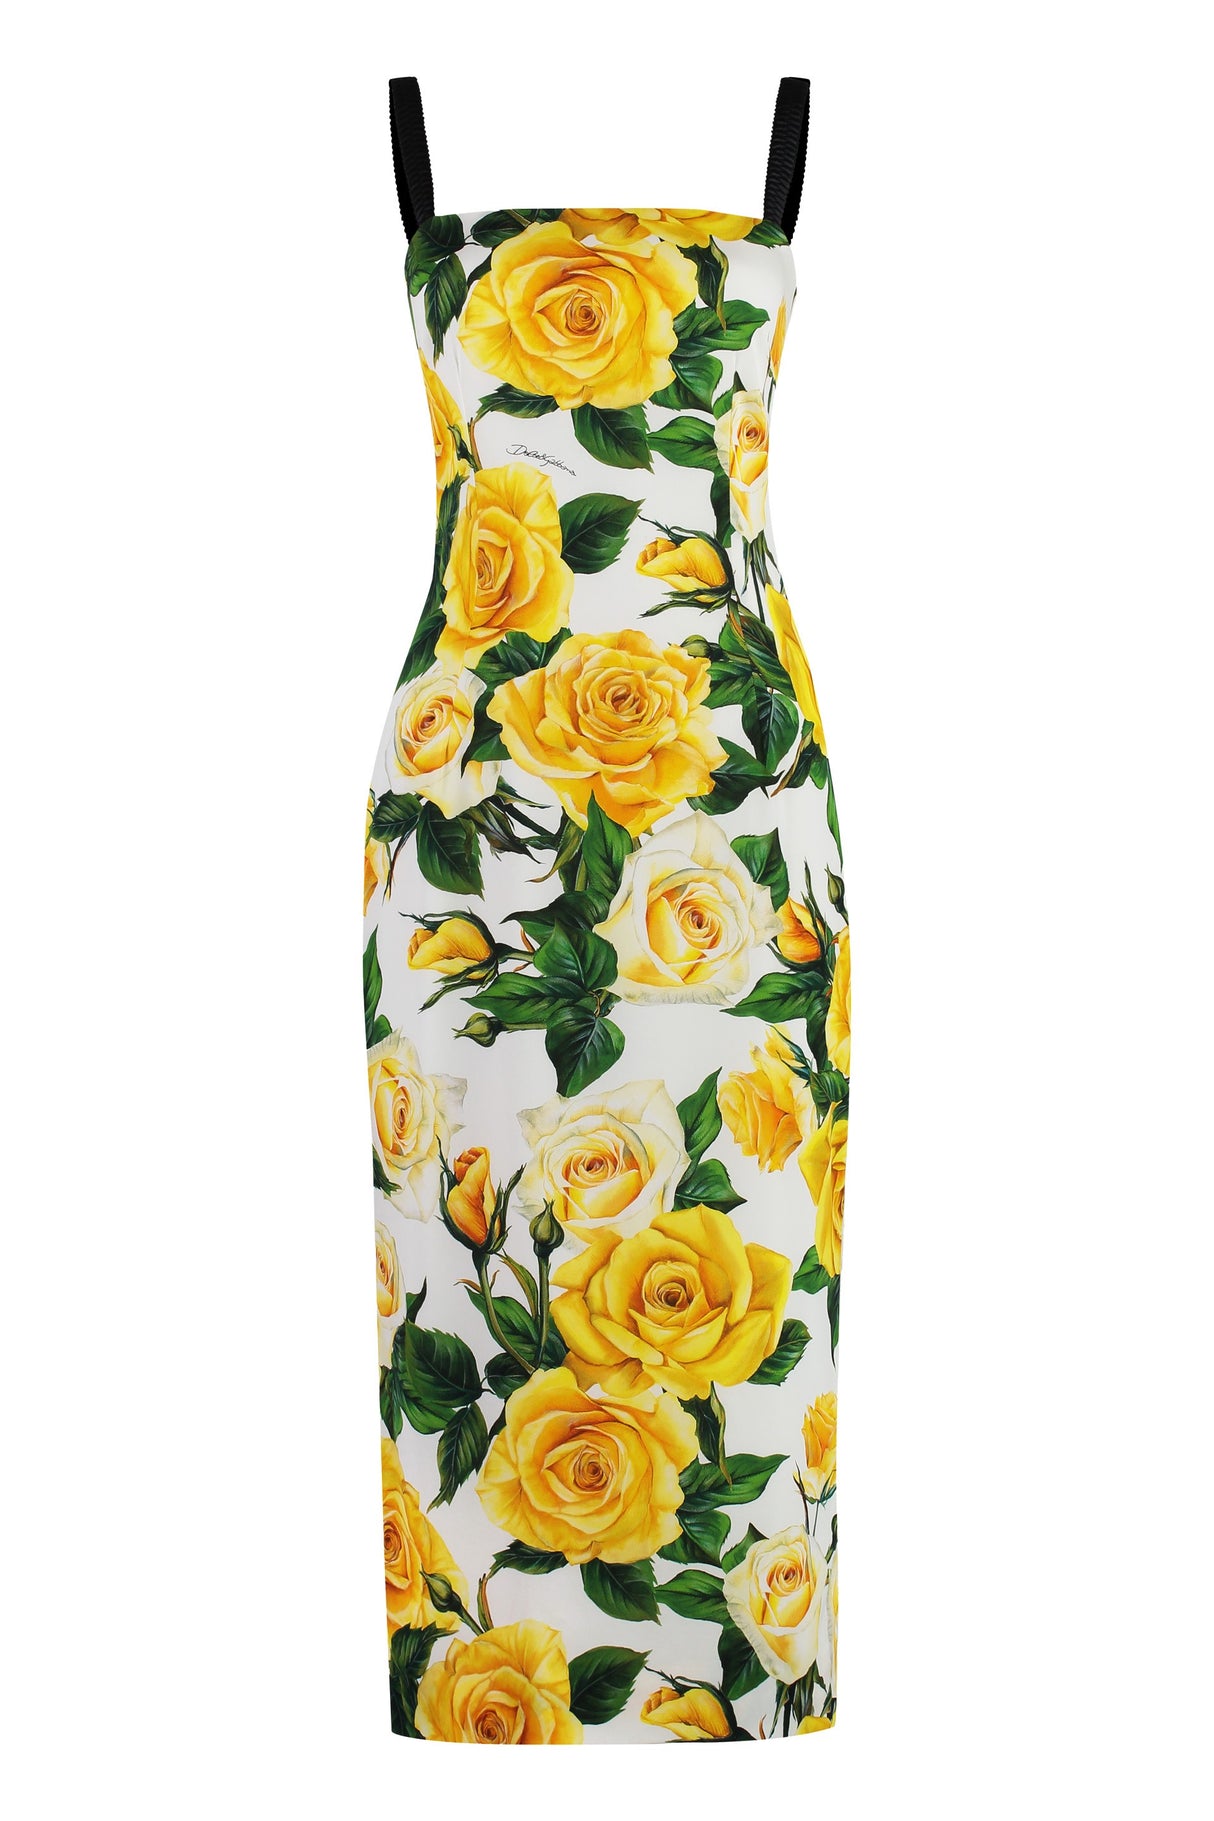 DOLCE & GABBANA Floral Print Silk Dress with Back Slit - Multicolor